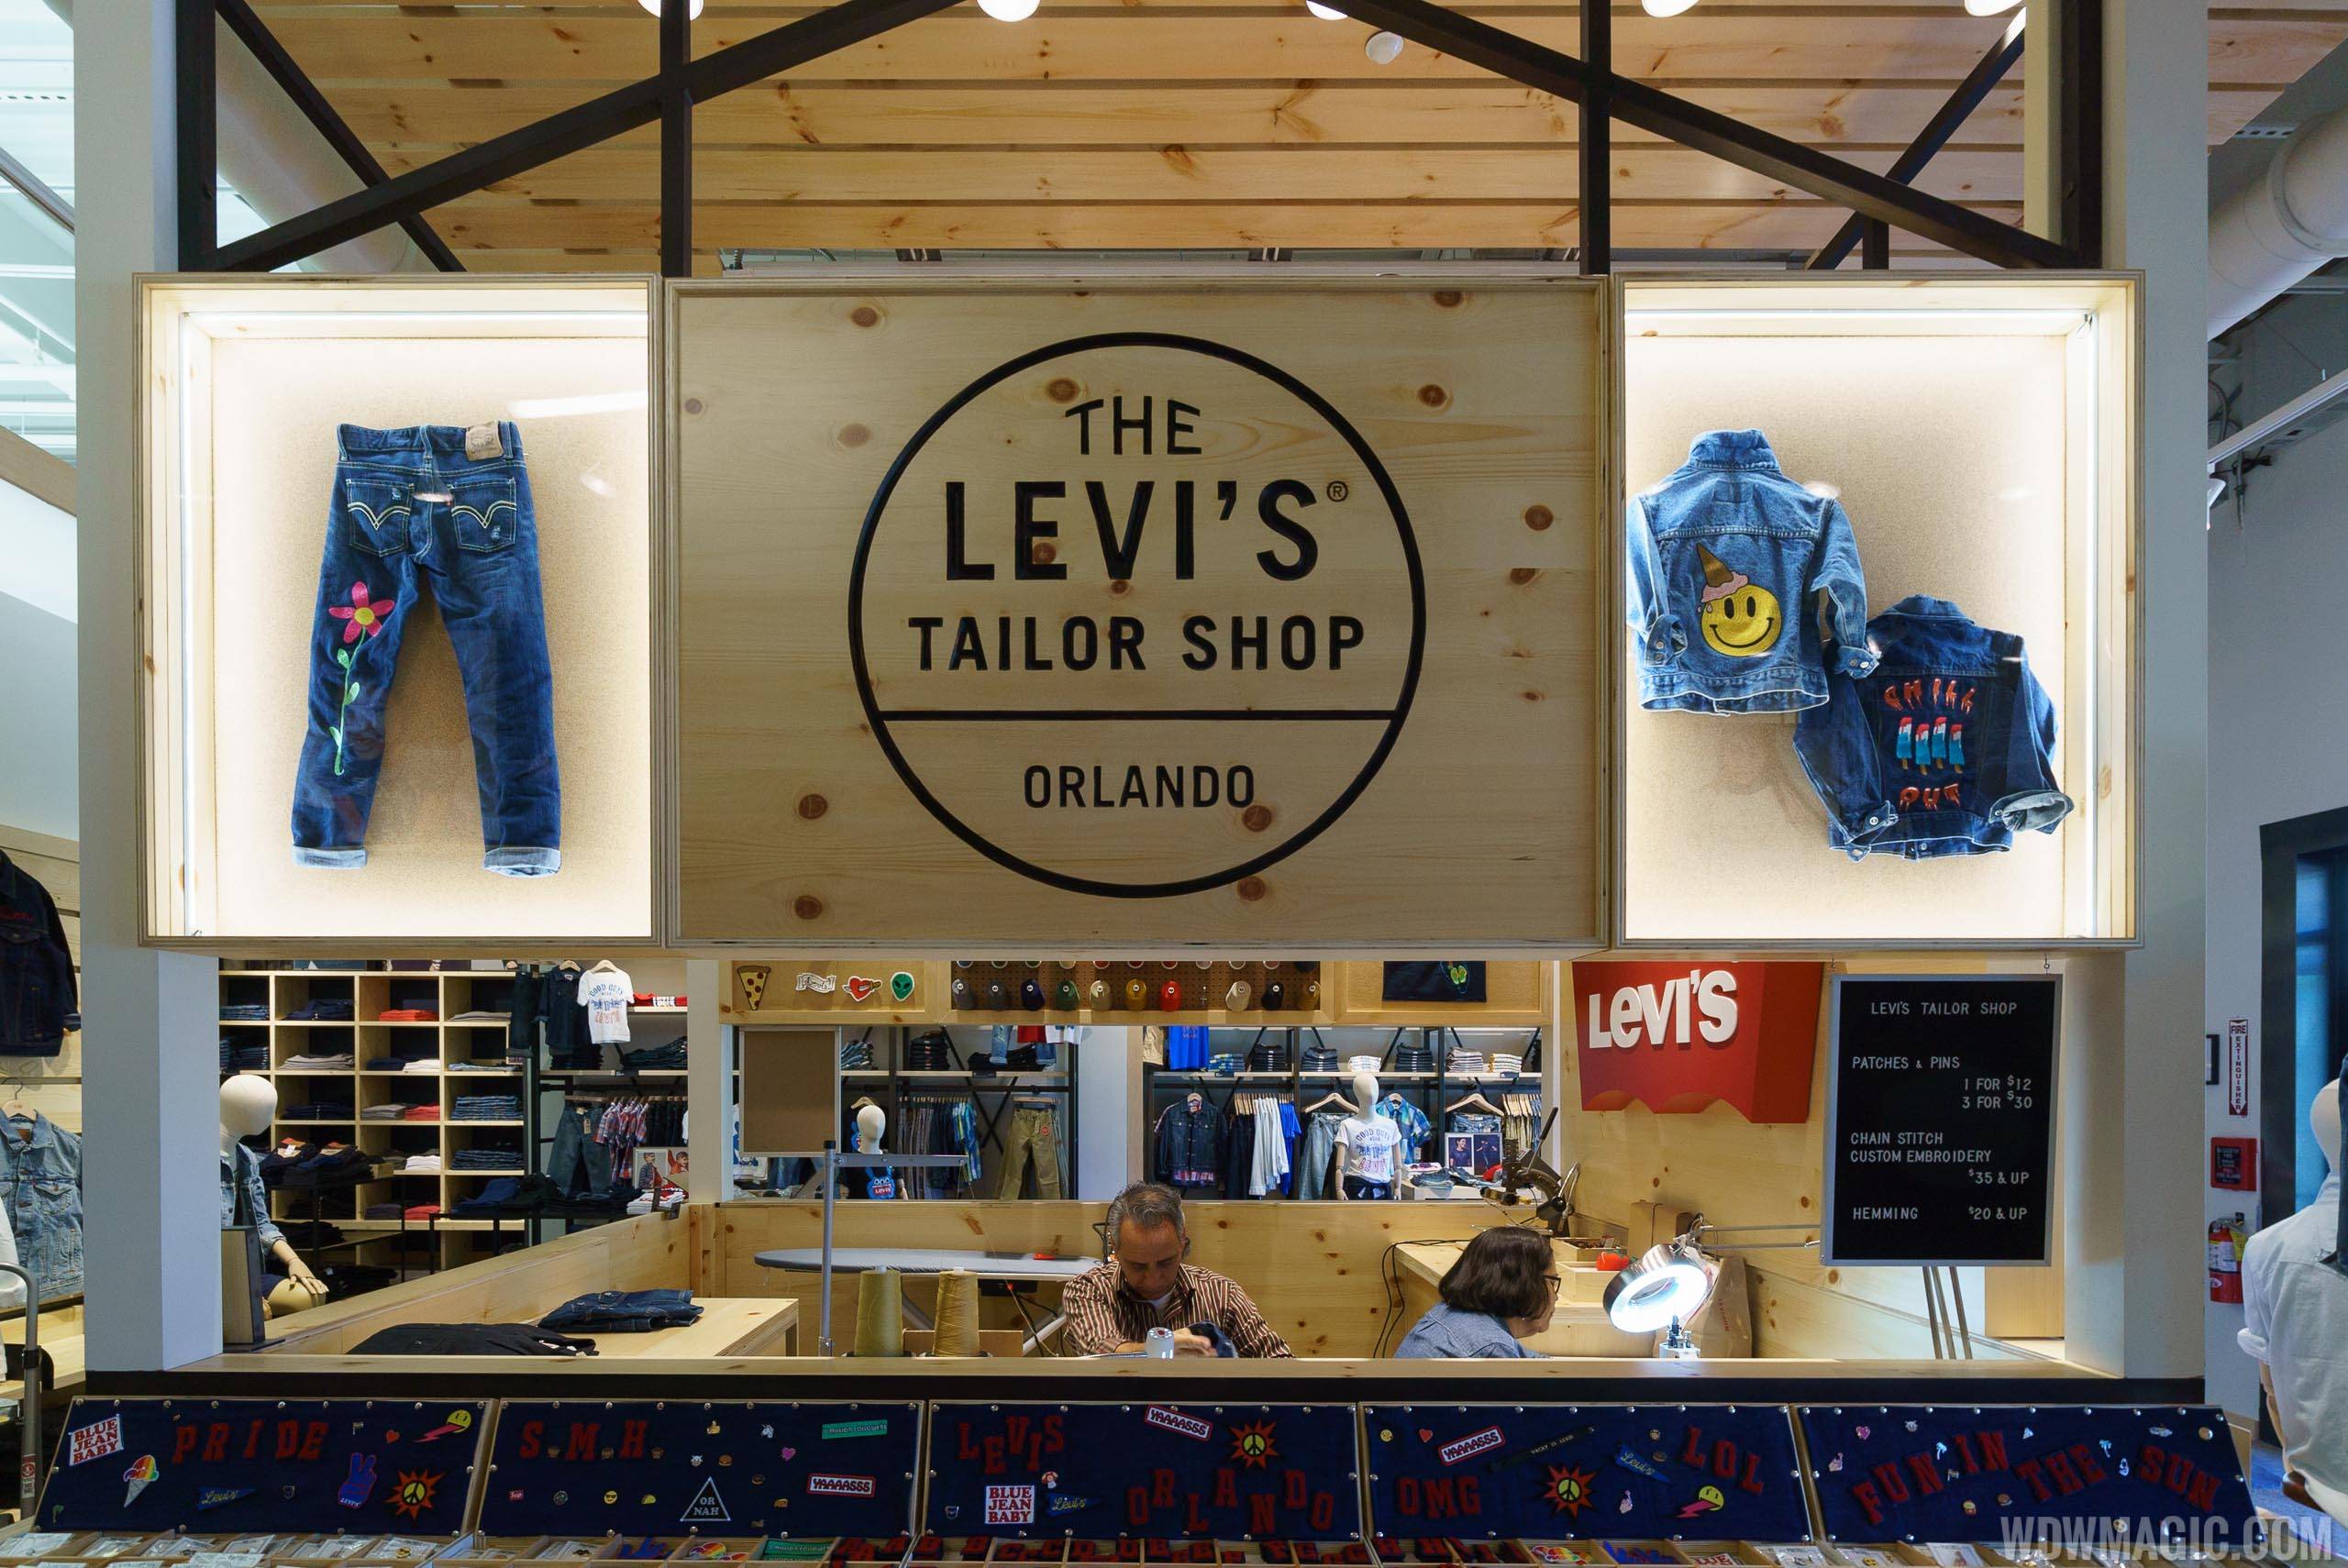 The Levi's Taylor Shop Orlando at Disney Springs